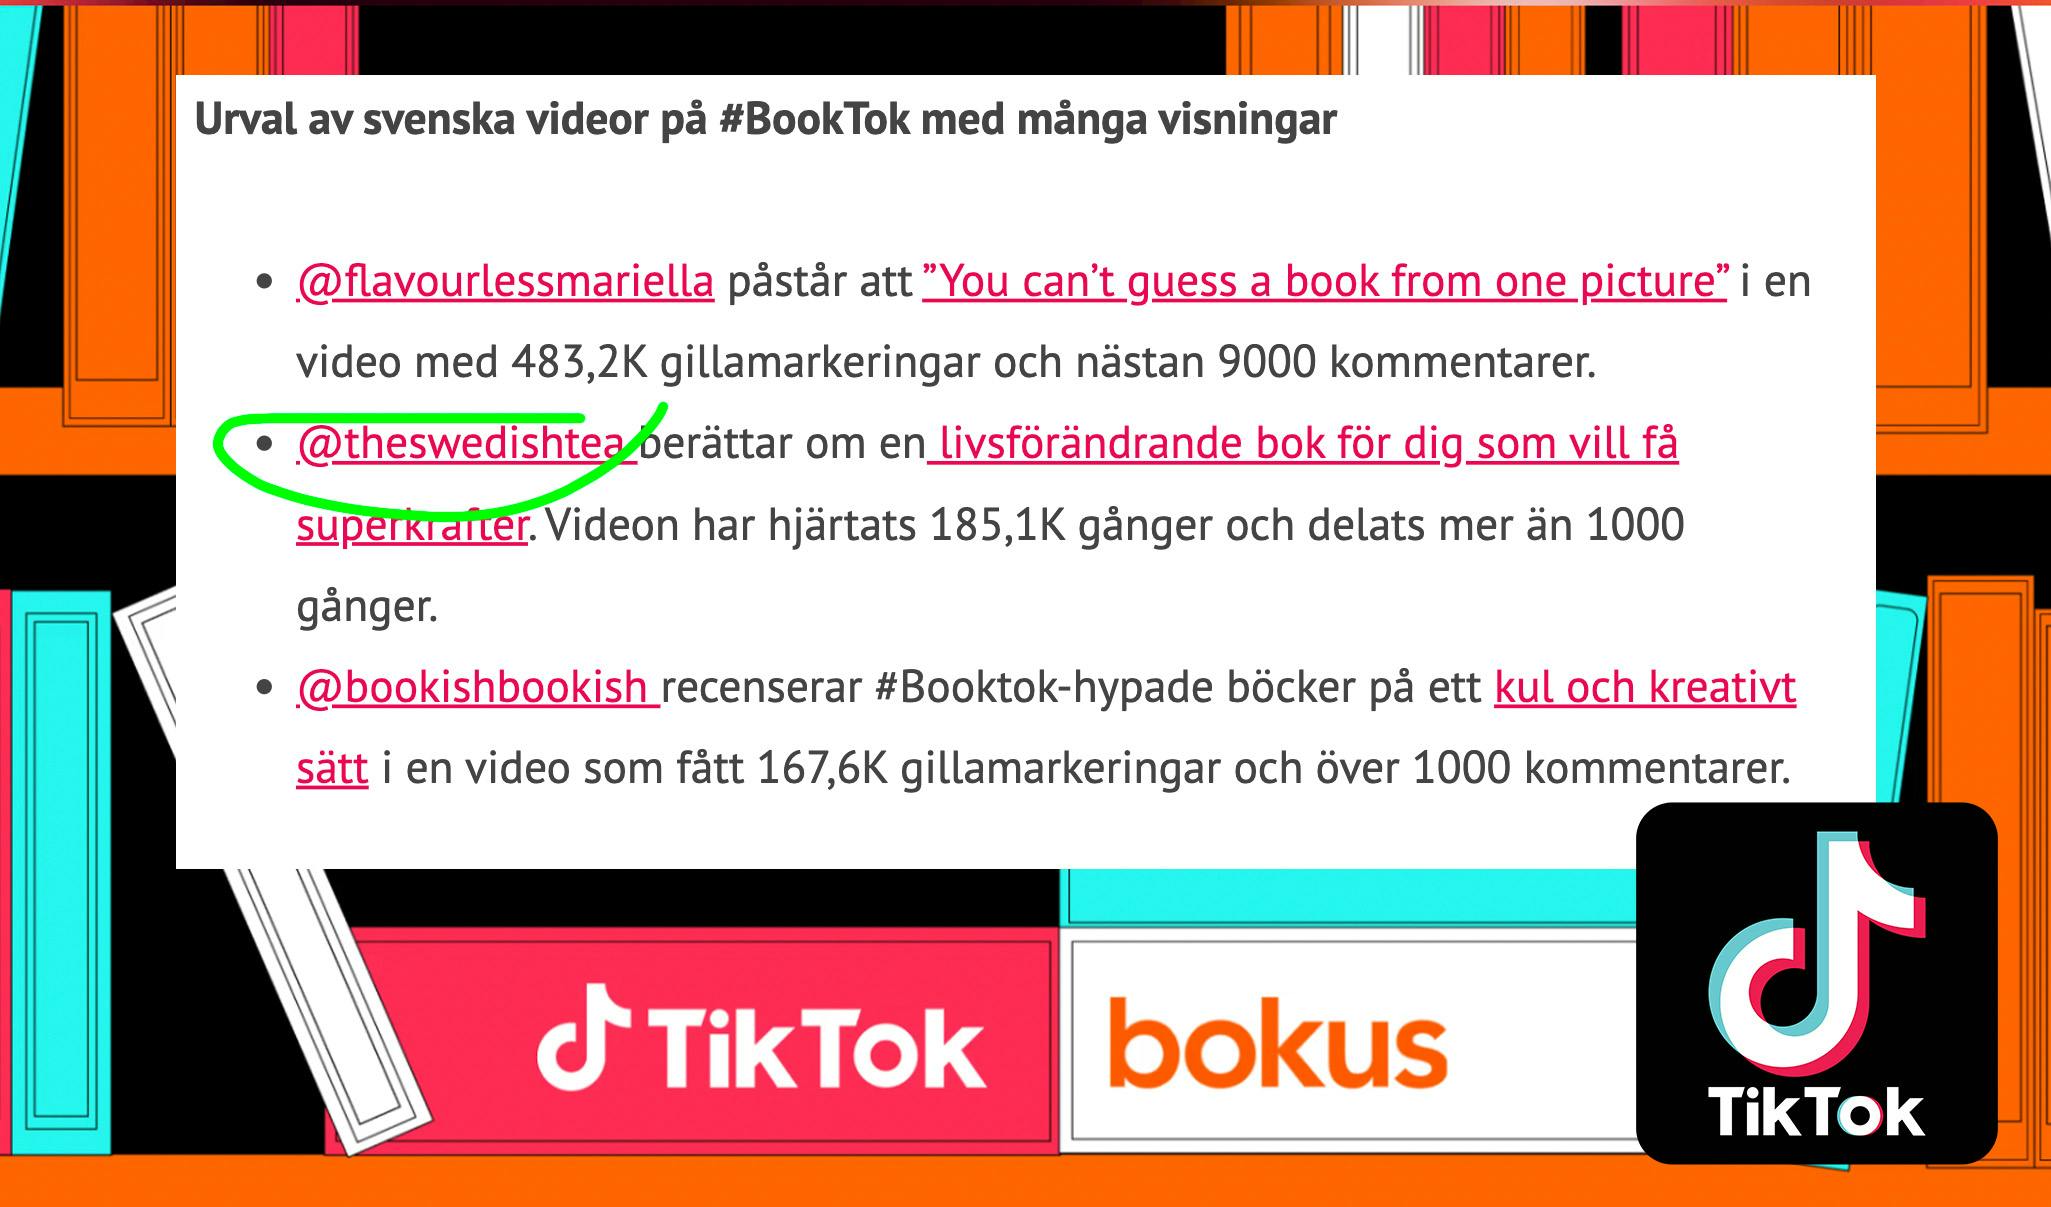 TikTok Nordics press release mentioning @jonathanrintala (prev @theswedishtea)